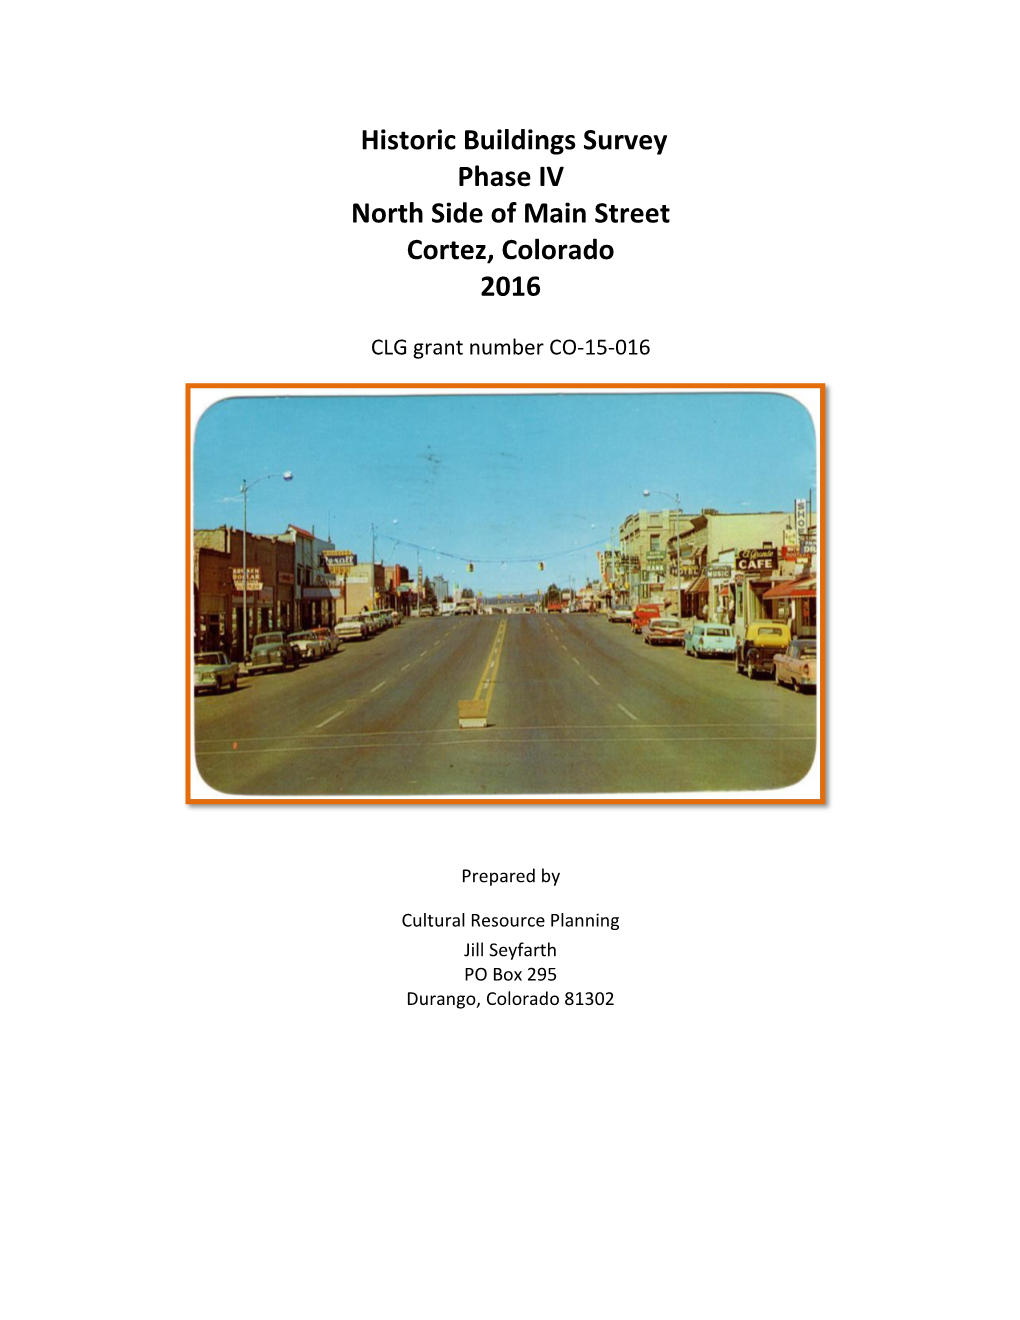 Historic Buildings Survey Phase IV North Side of Main Street Cortez, Colorado 2016